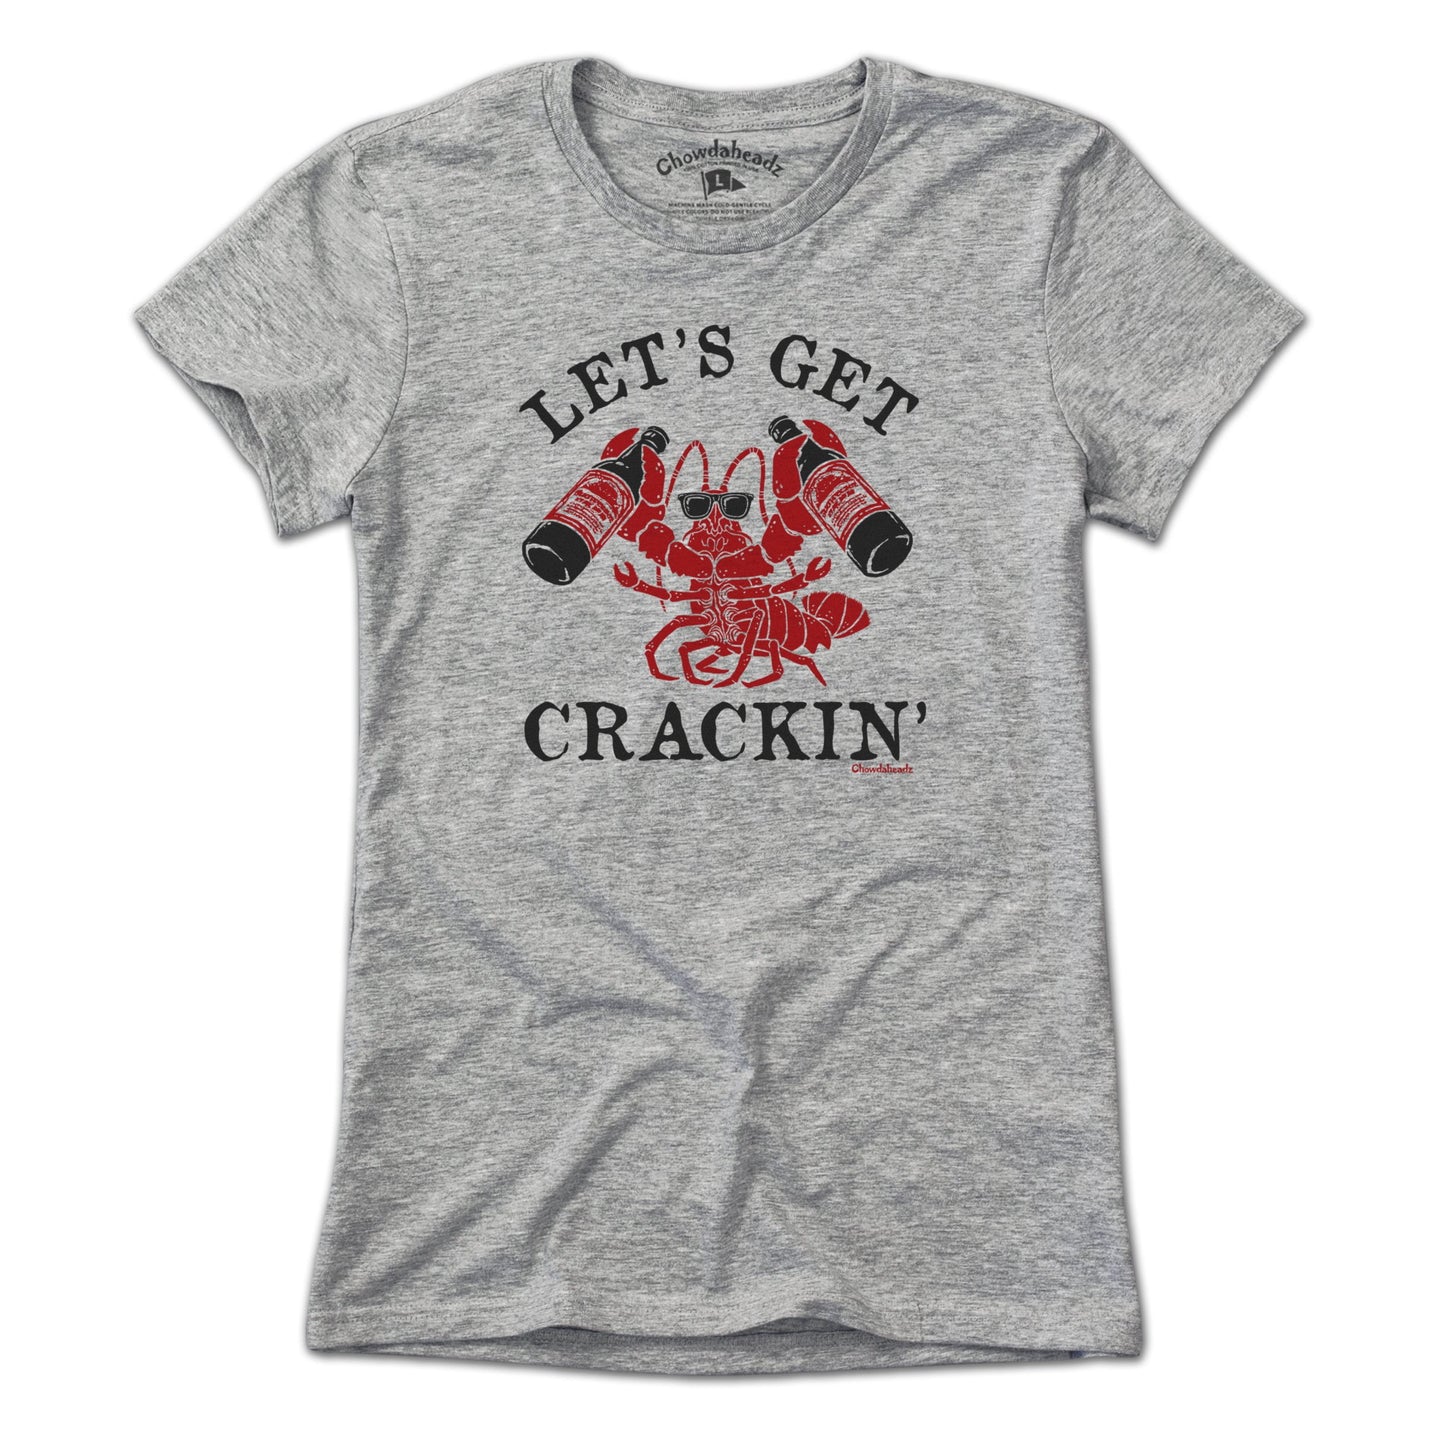 Let's Get Crackin' Lobstah T-Shirt - Chowdaheadz